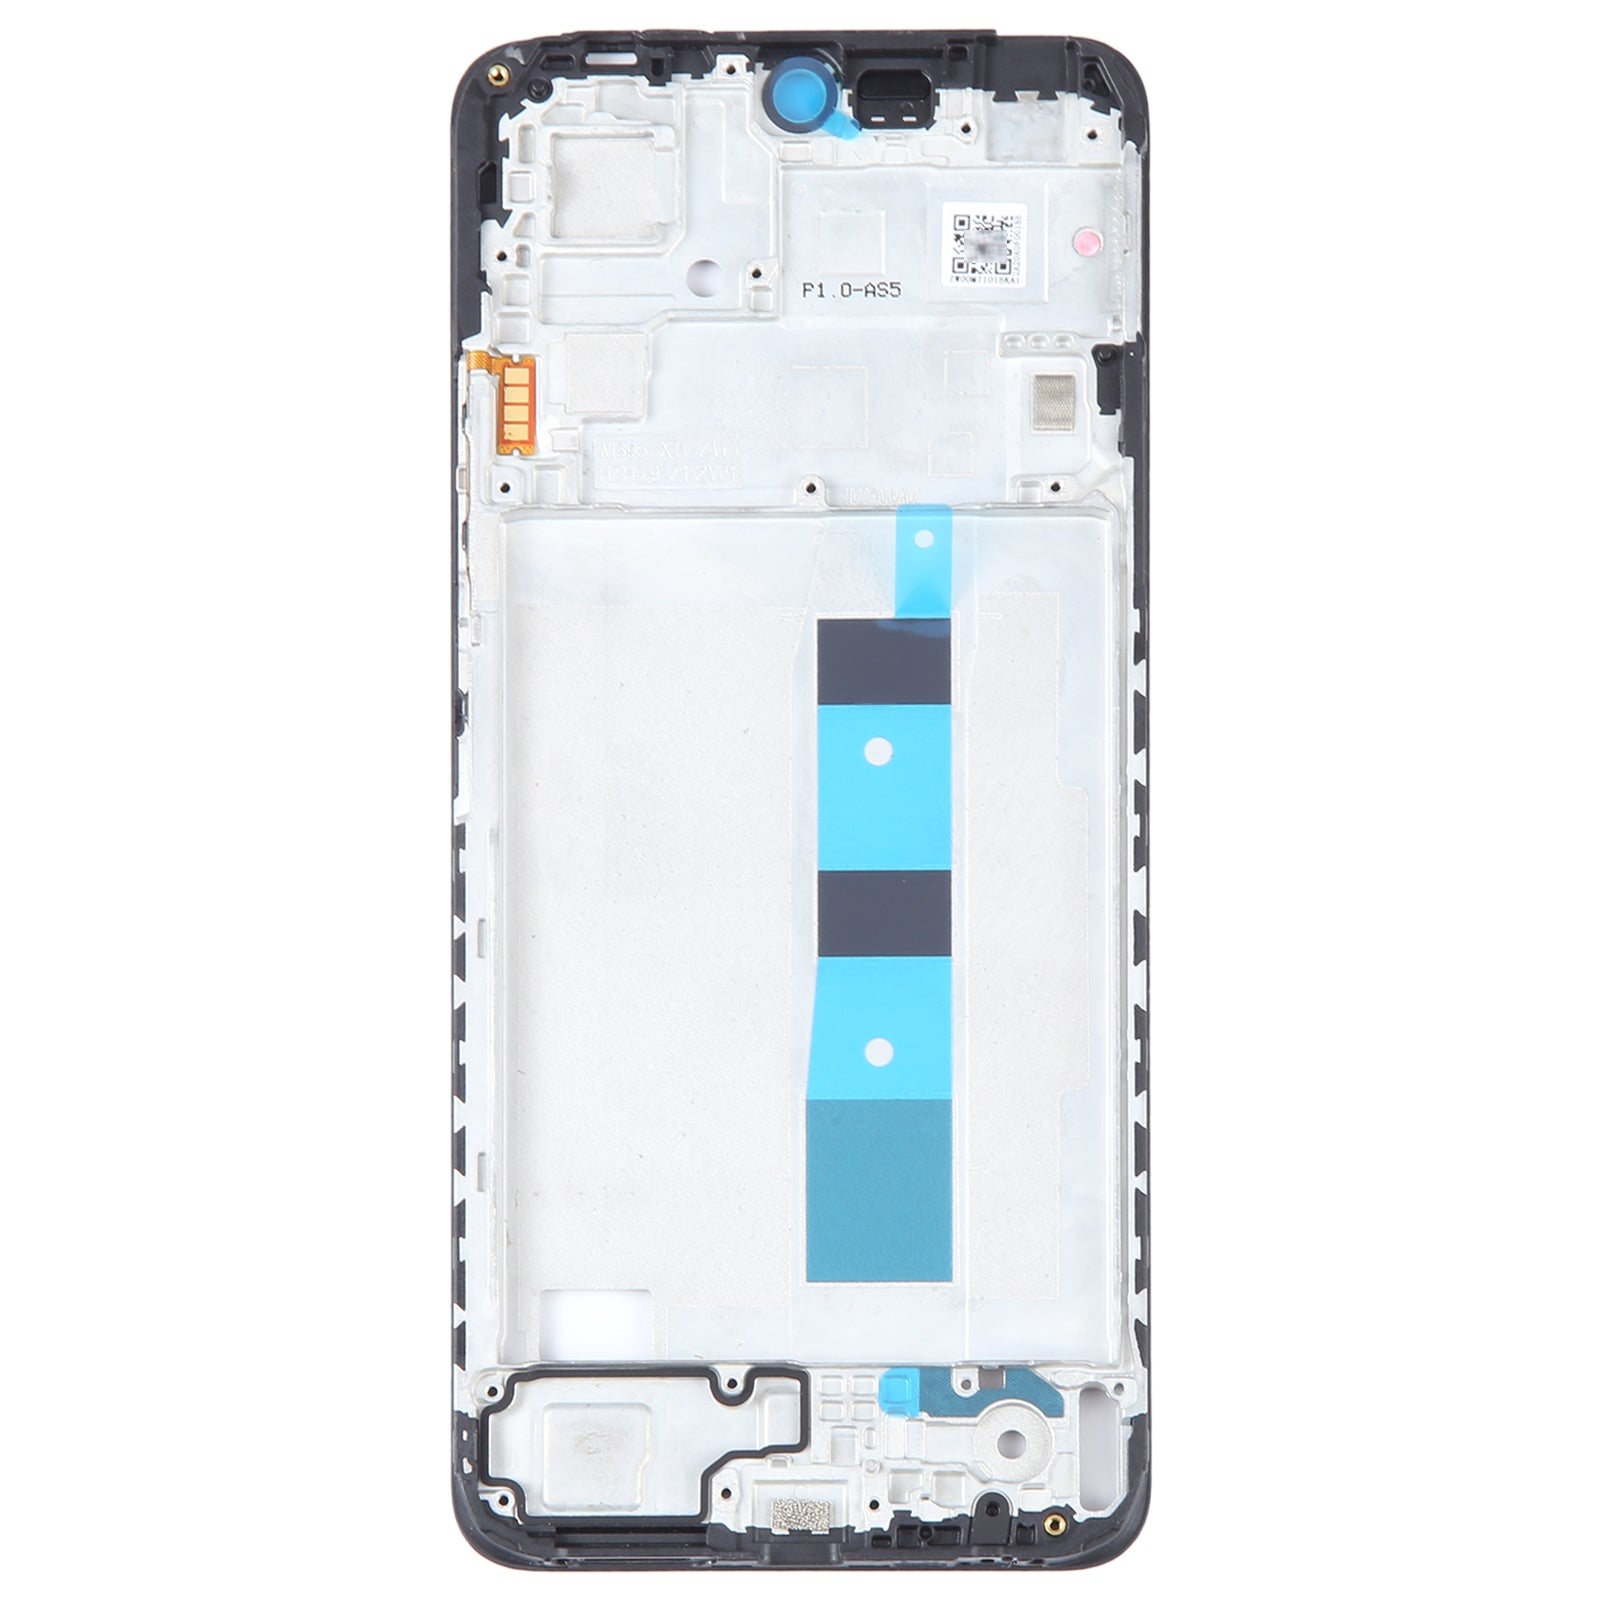 Xiaomi Redmi Note 12 4G LCD Intermediate Frame Chassis